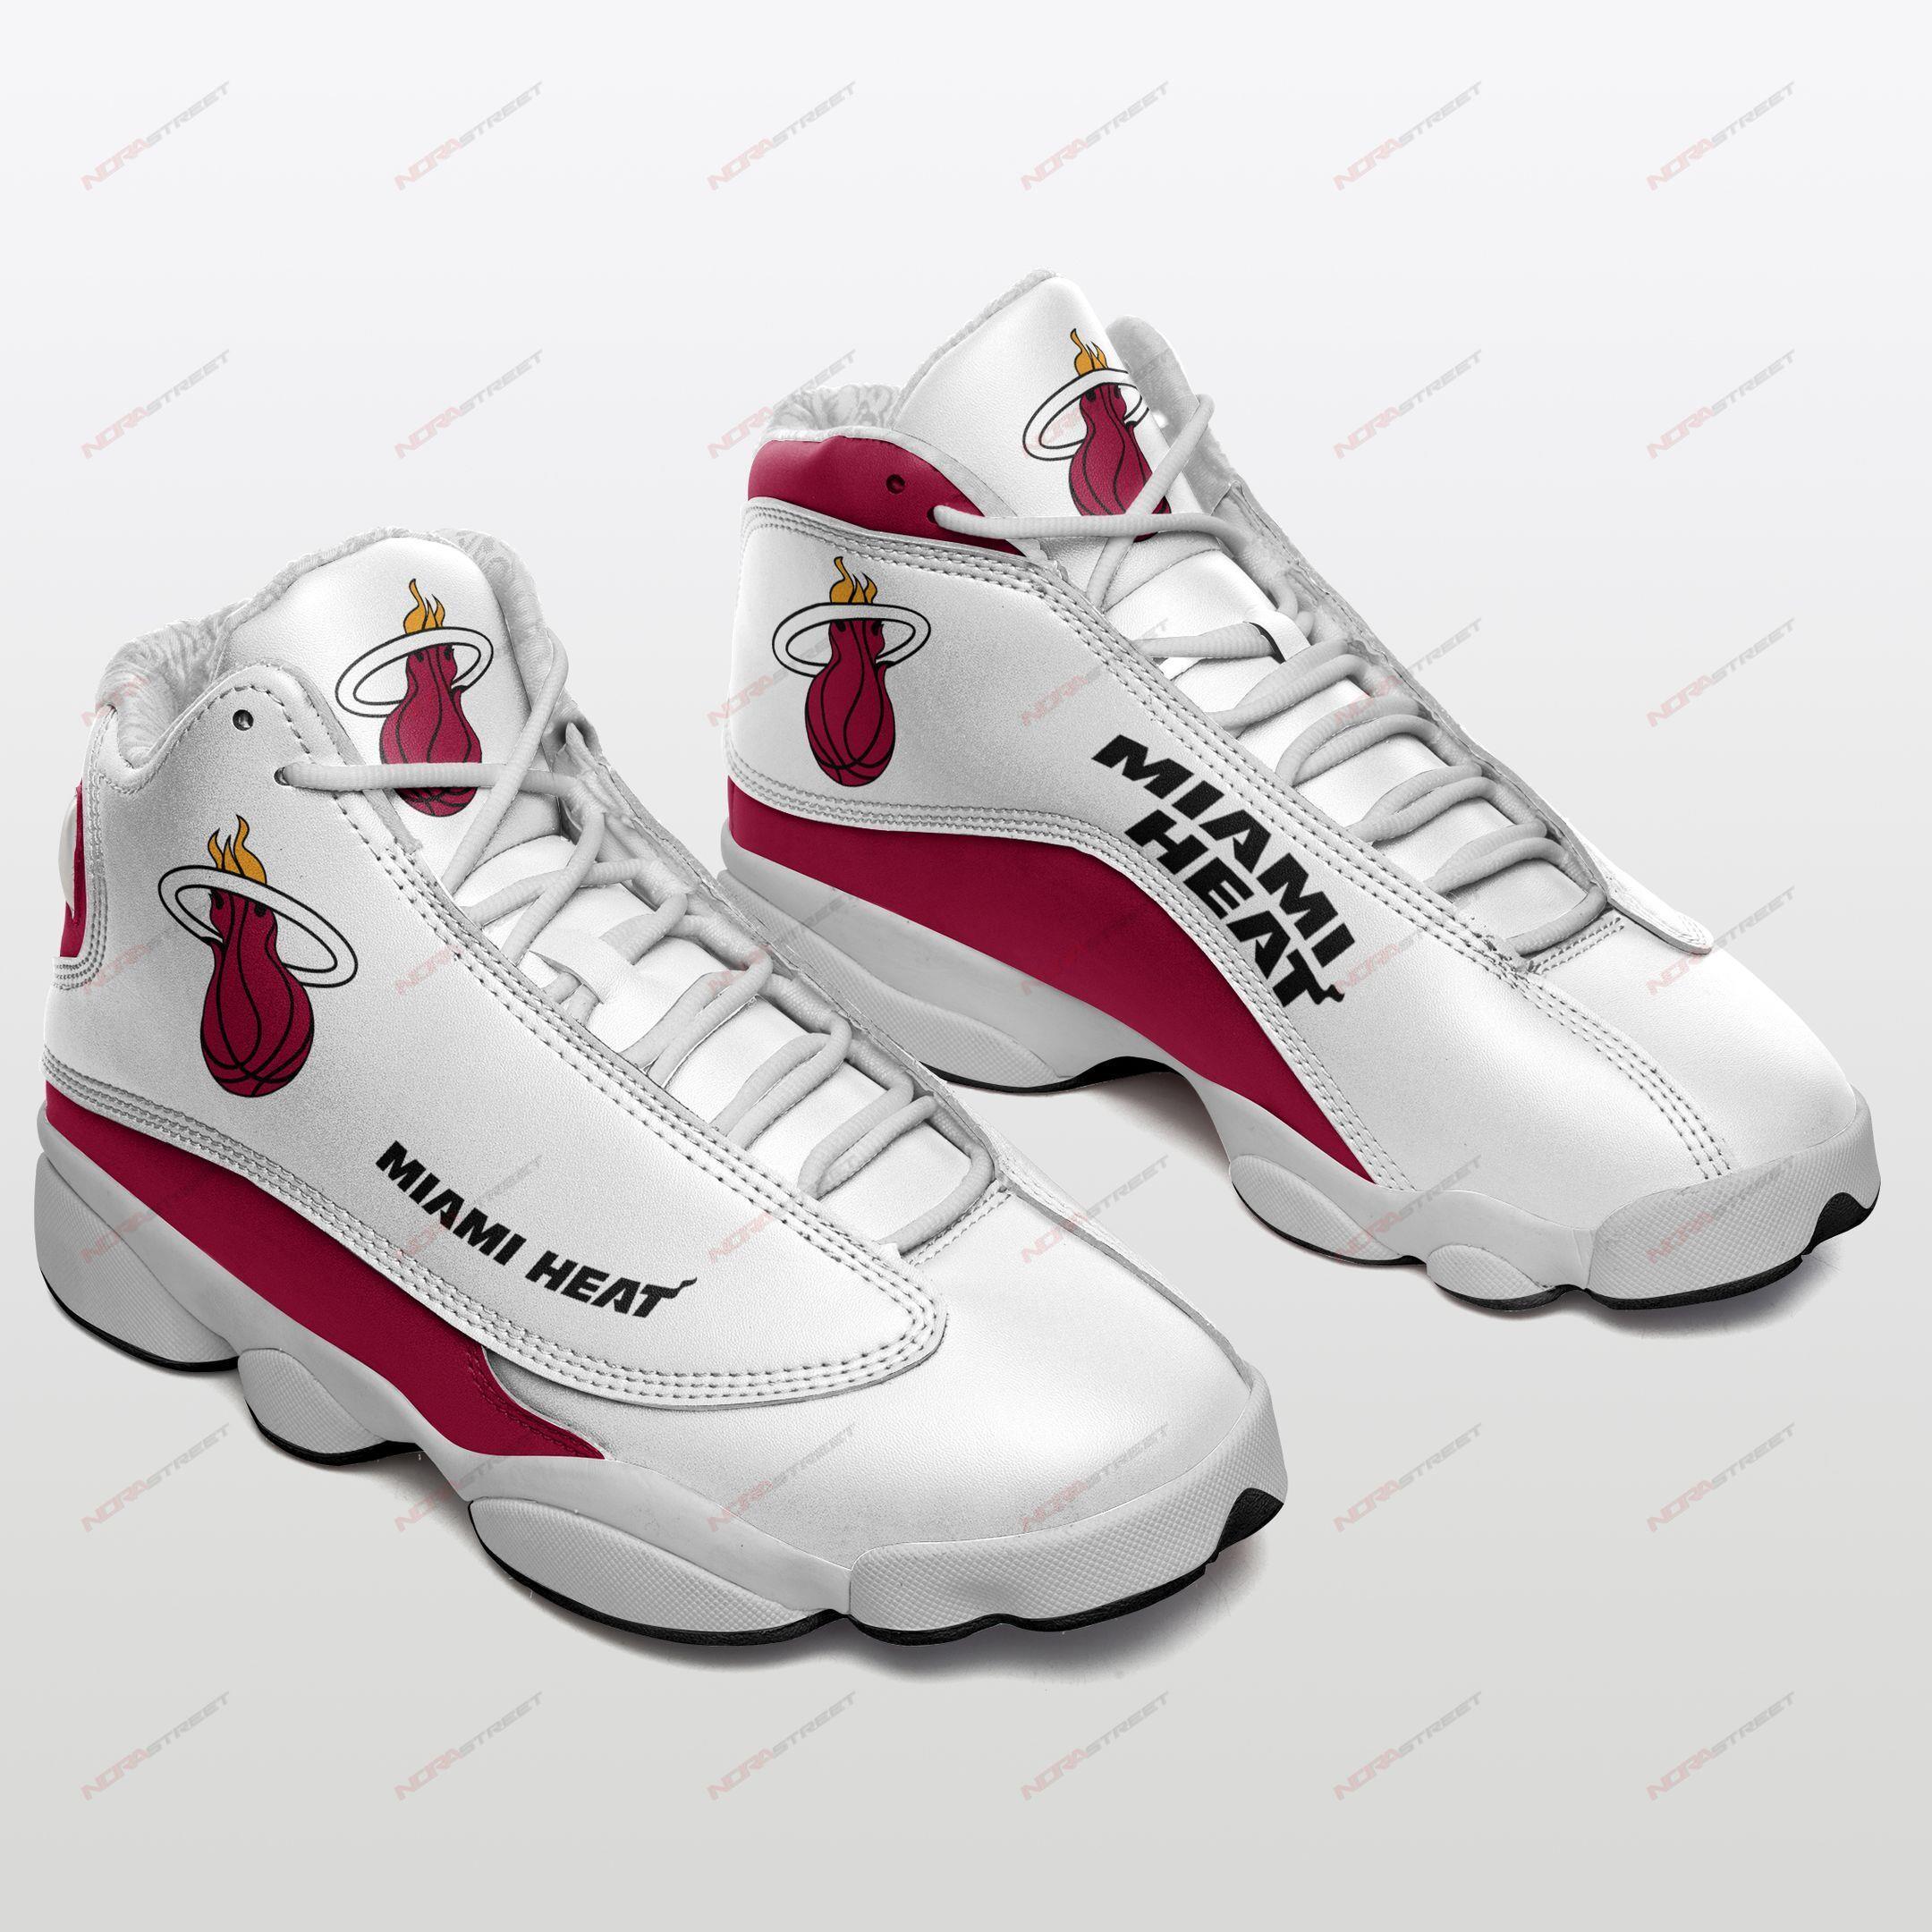 Miami Heat Air Jordan 13 Sneakers Sport Shoes Plus Size